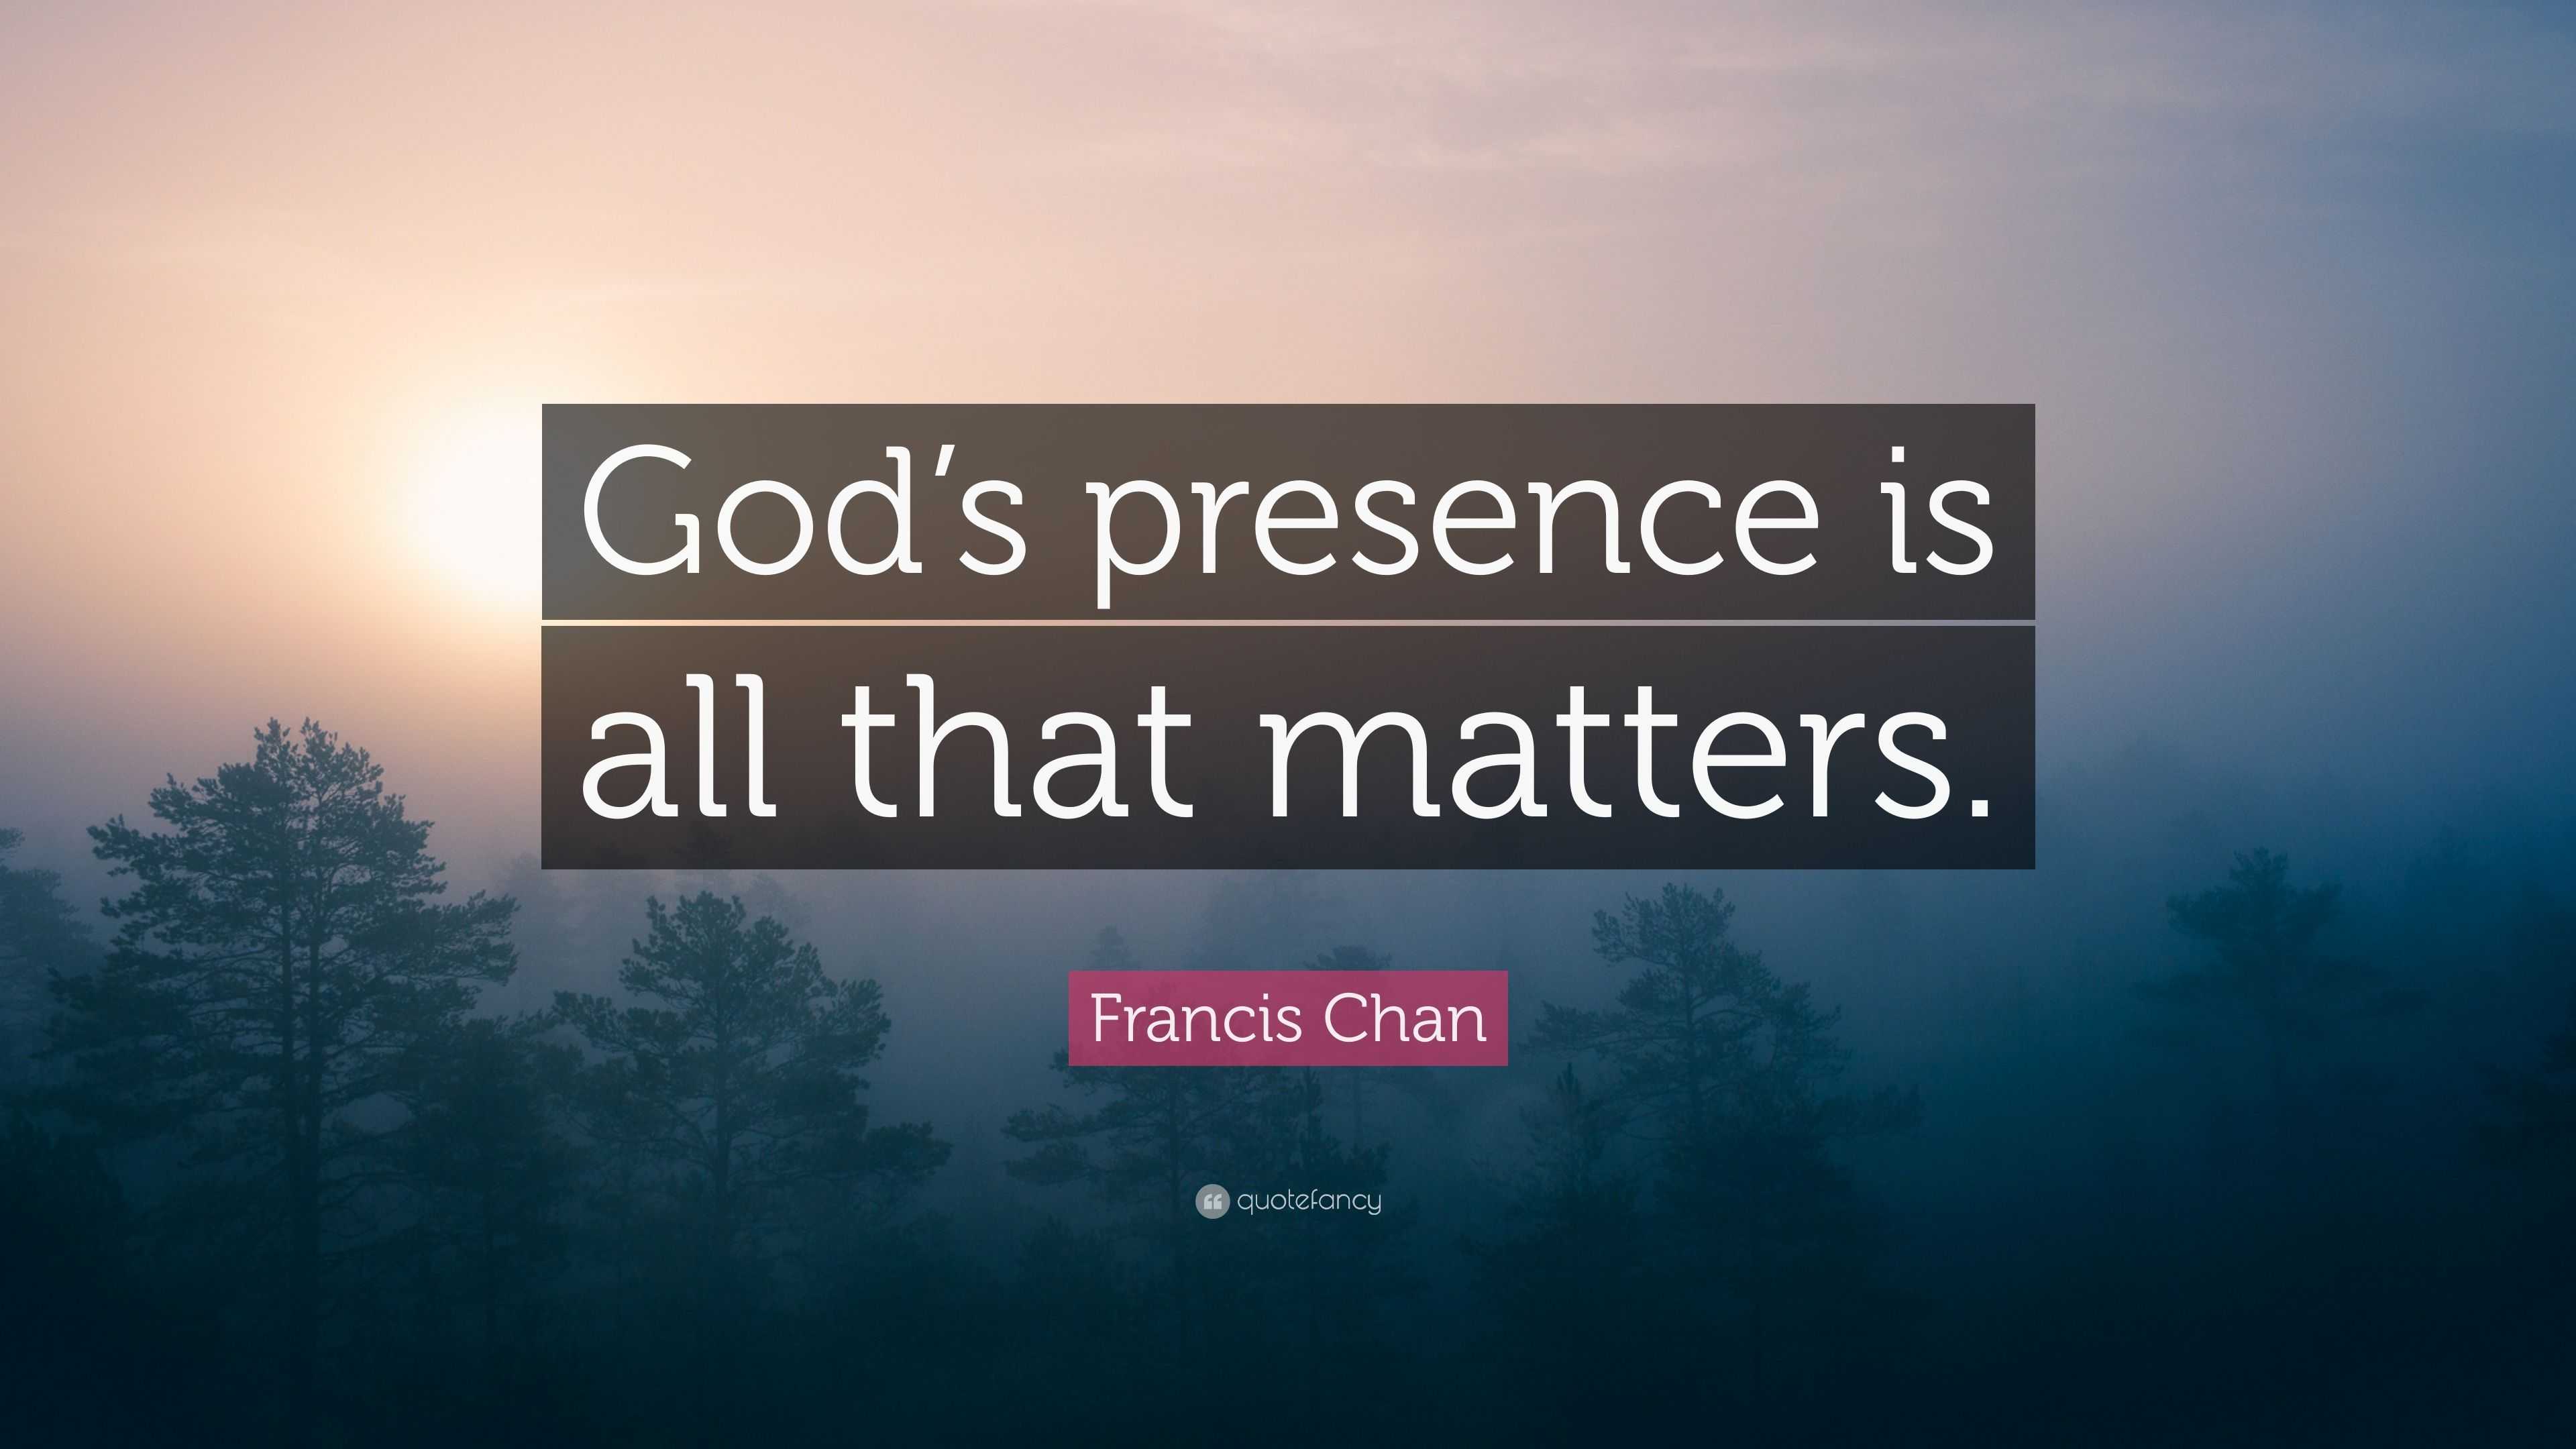 the presence of god